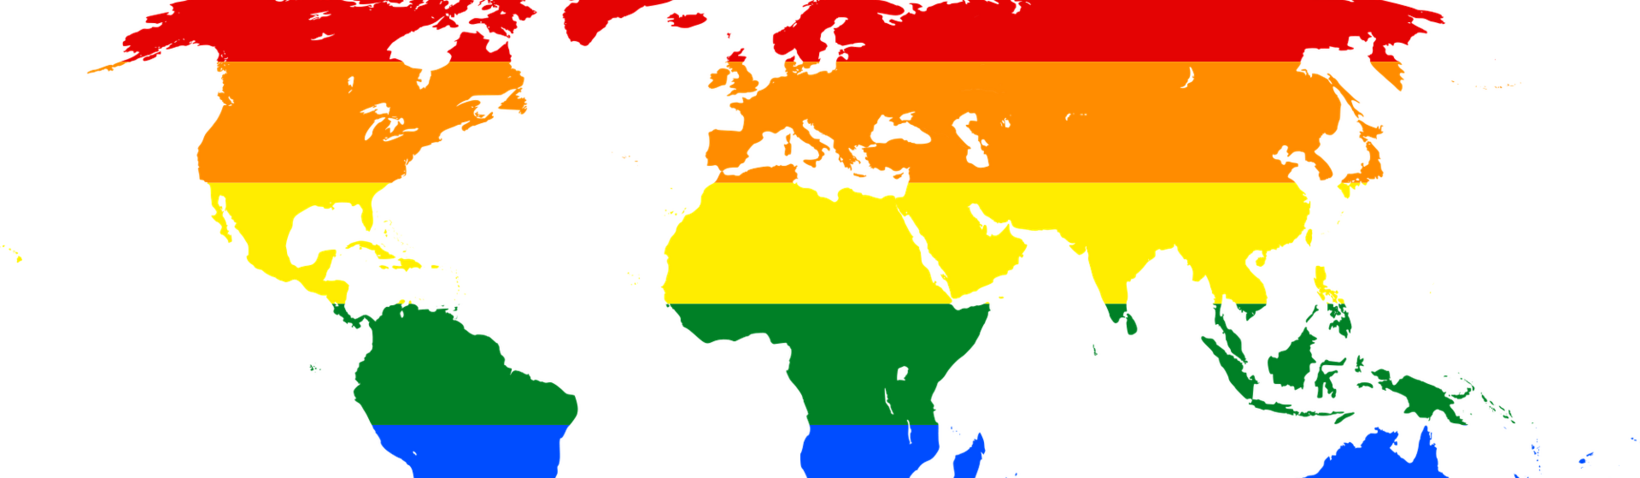 Weltkarte in Regenbogenfarben 